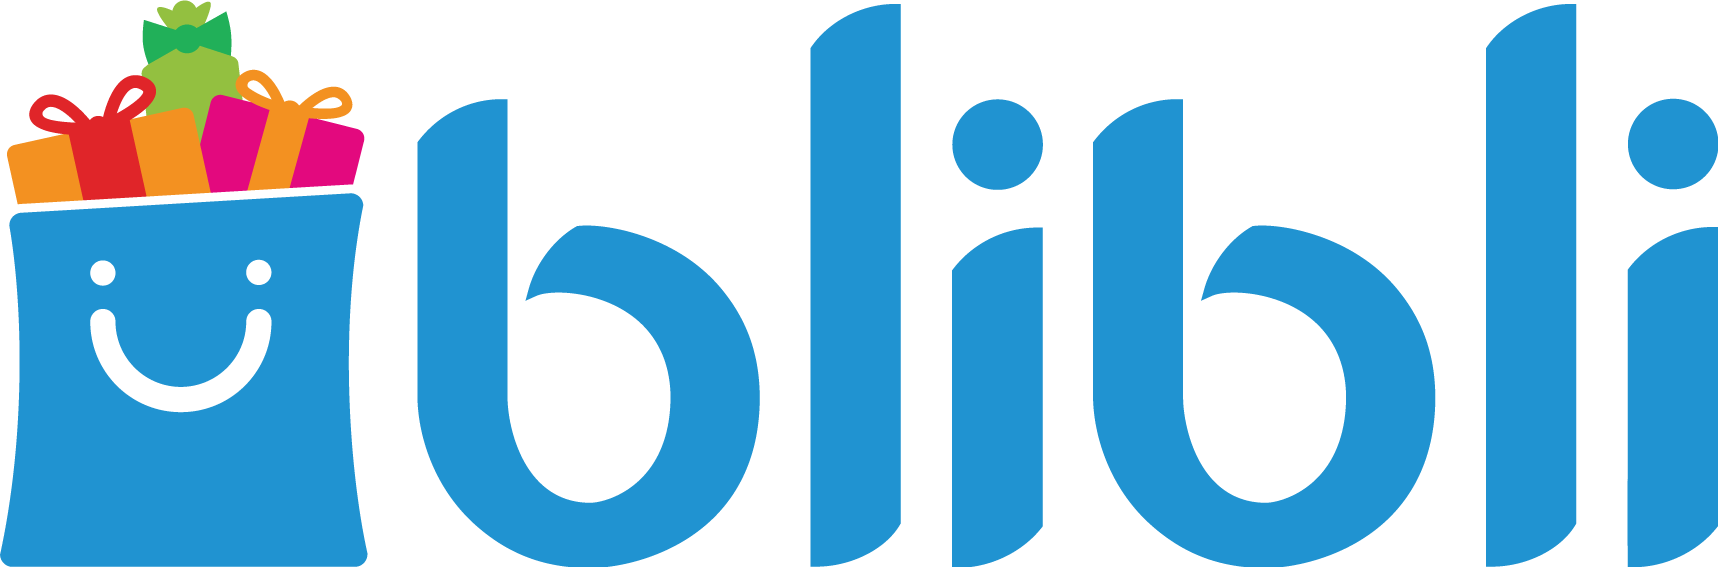 Logo Blibli